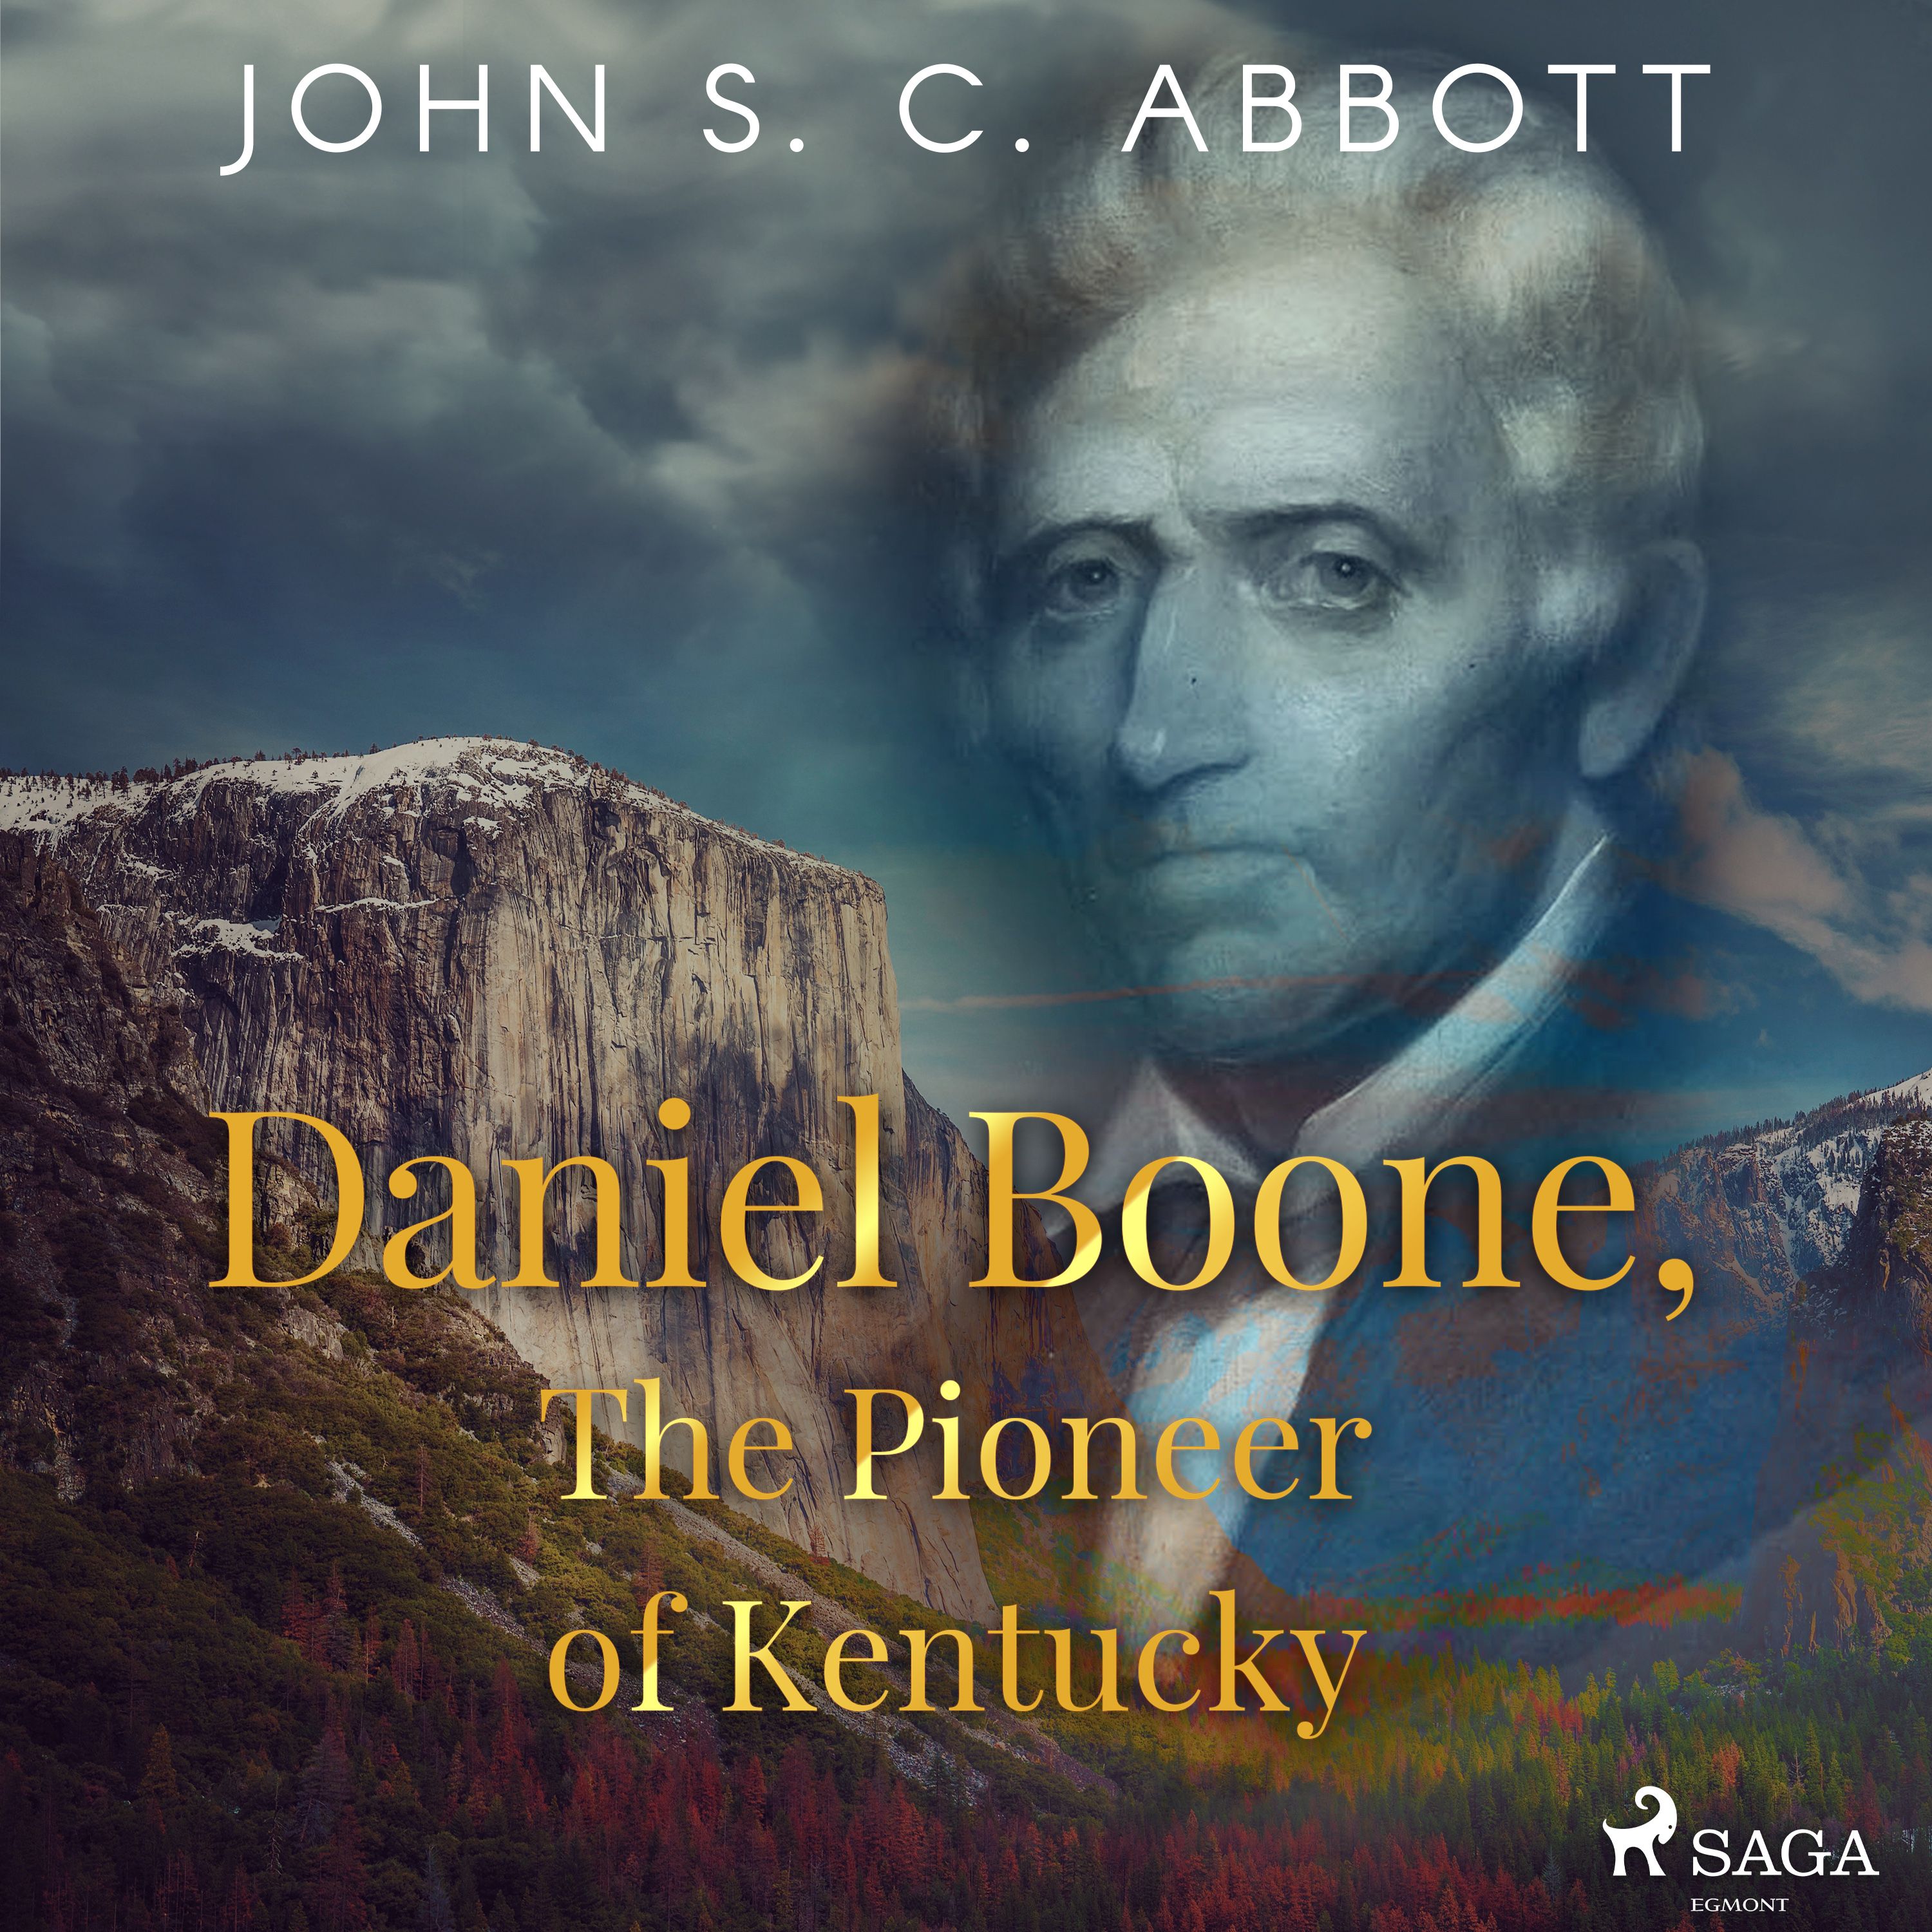 Daniel Boone, The Pioneer of Kentucky, audiobook by John S. C. Abbott